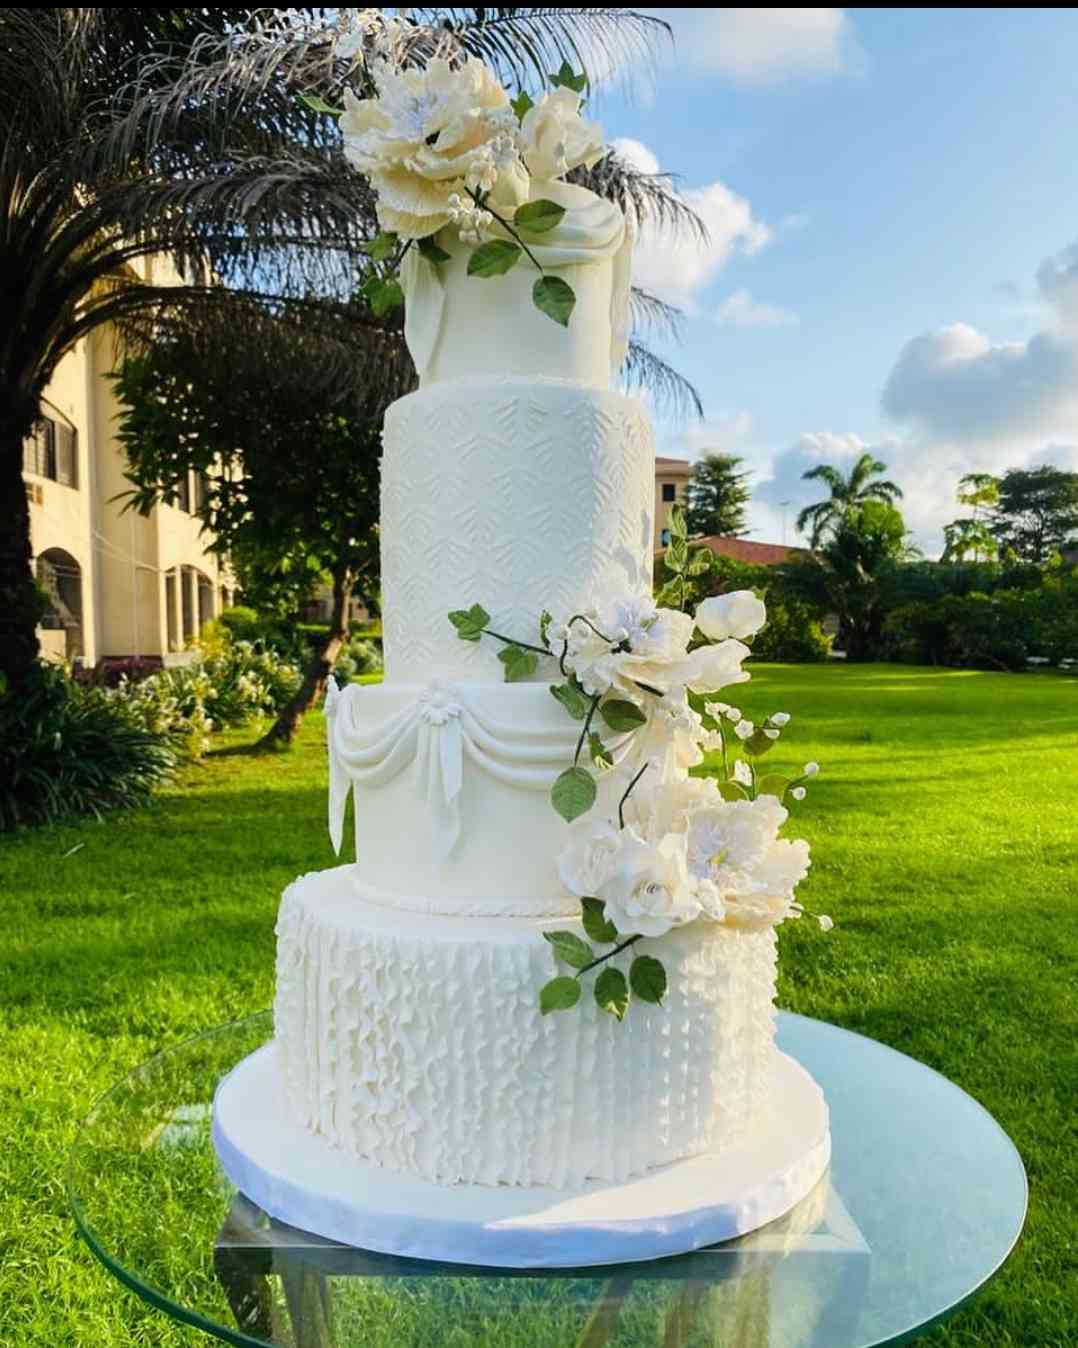 FOUR TIER WEDDING CAKE 12345